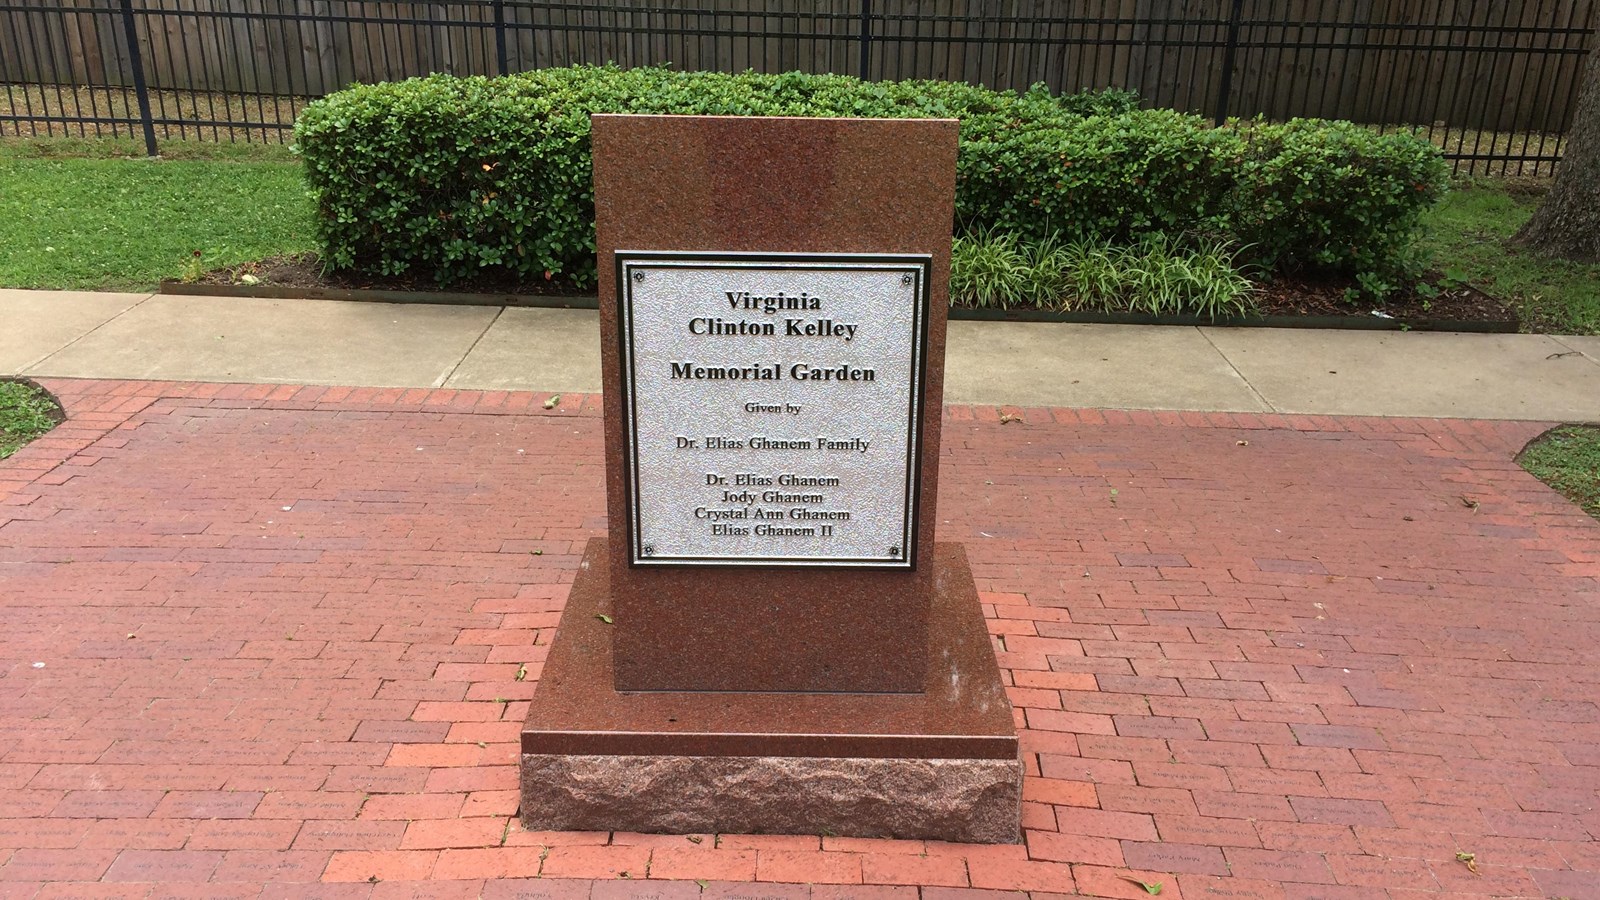 A marker honoring Virginia Clinton Kelley, the mother of President Bill Clinton.